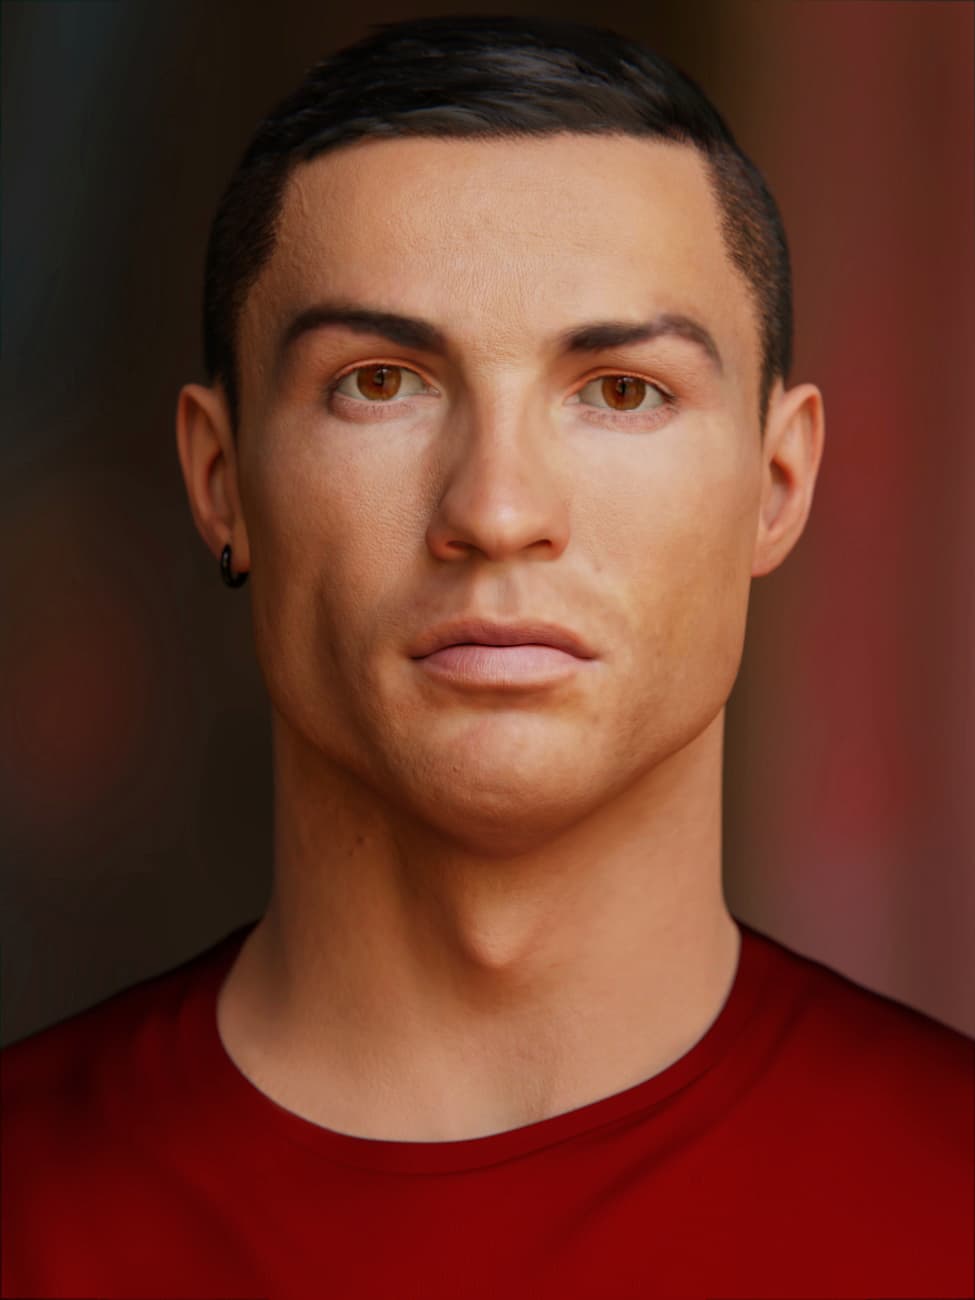 Cristiano Ronaldo - Finished Projects - Blender Artists Community